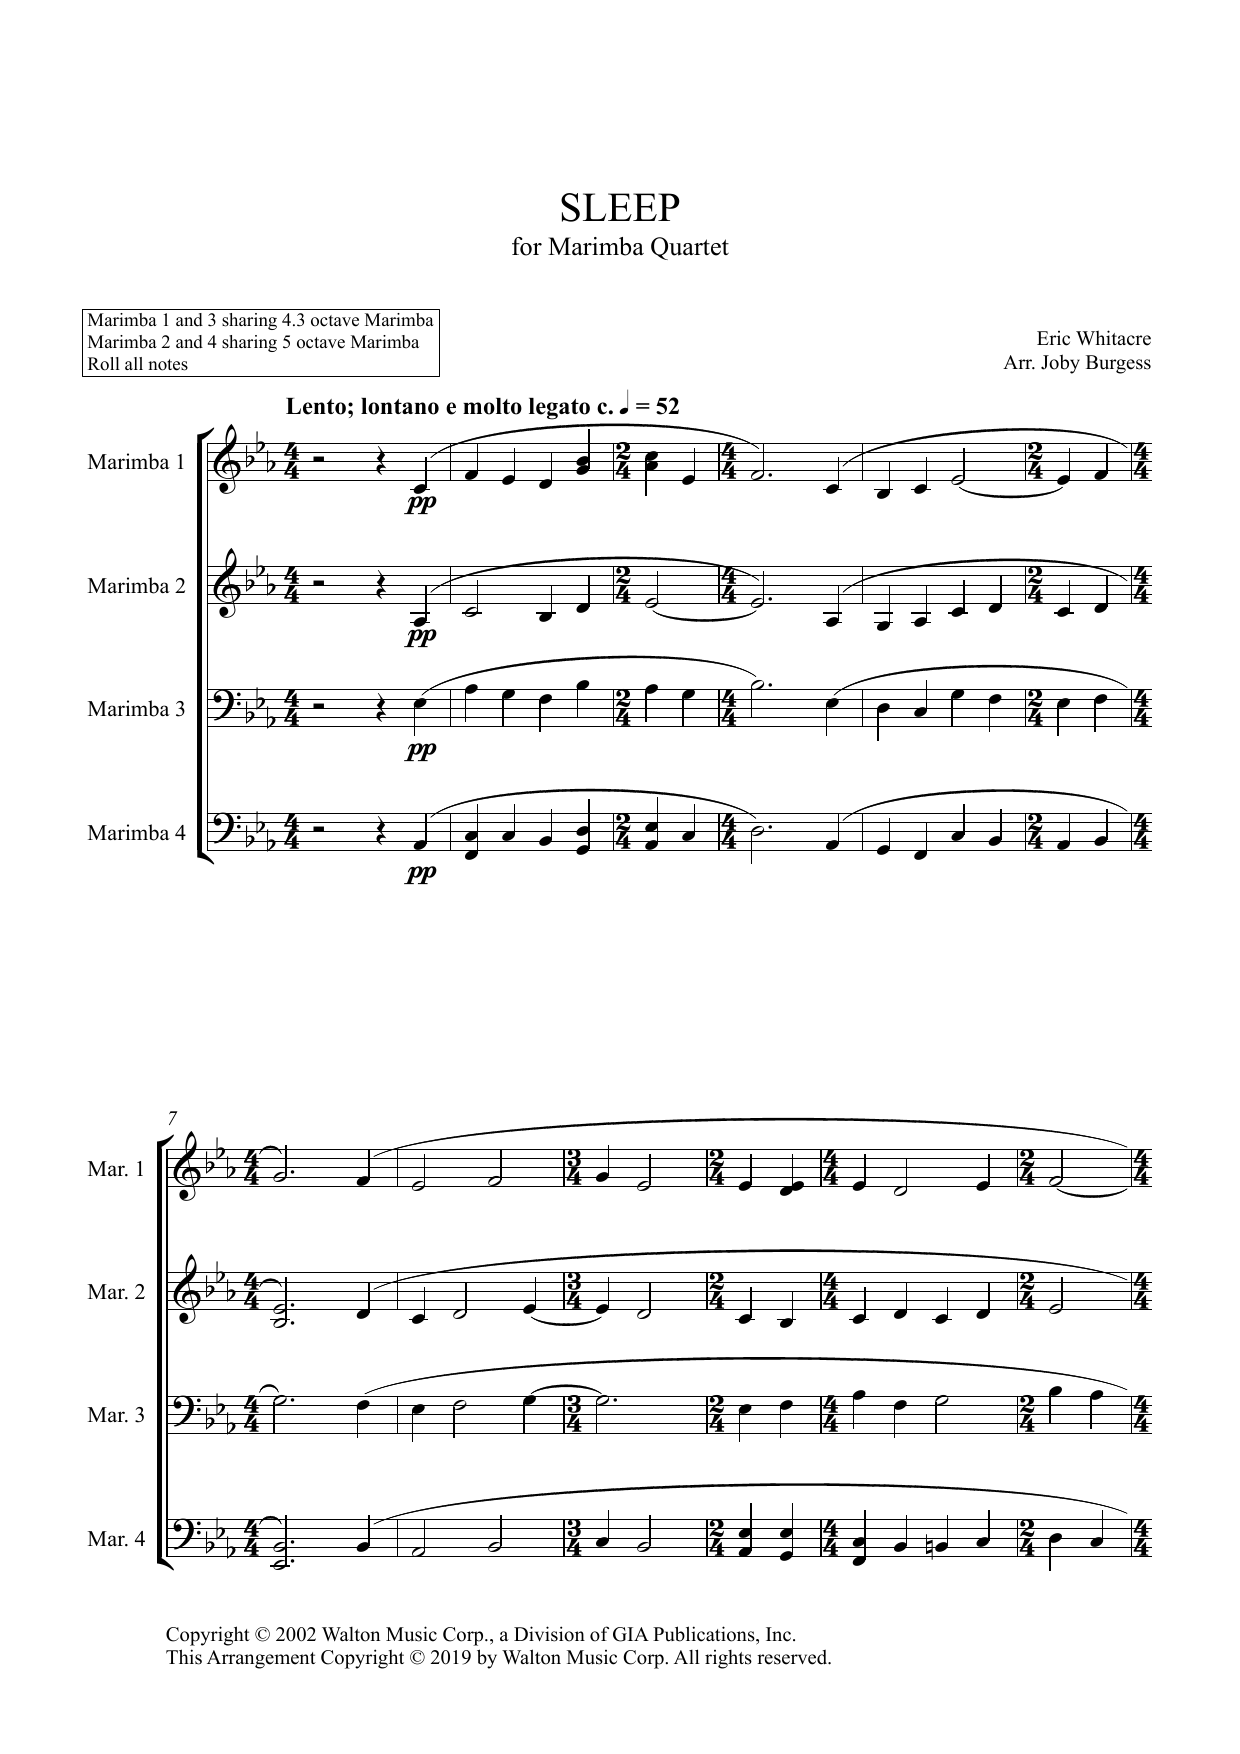 Eric Whitacre Sleep for Marimba Quartet (arr. Joby Burgess) - Full Score Sheet Music Notes & Chords for Percussion Ensemble - Download or Print PDF